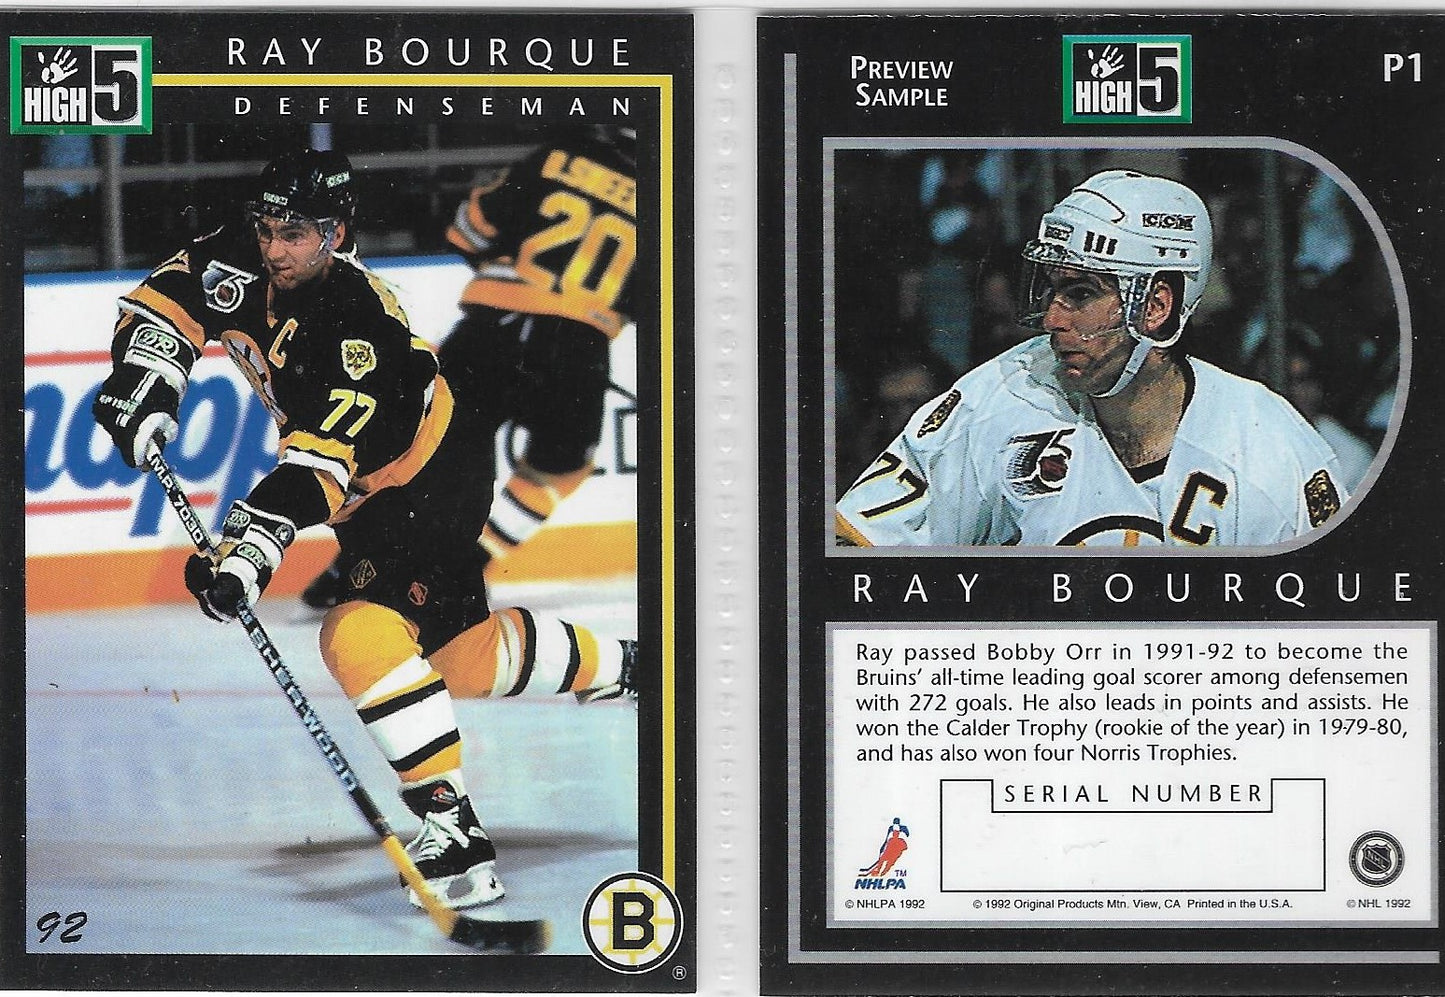 1992 HIGH 5 #P1 RAY BOURQUE "PREVIEW CARD" BOSTON BRUINS